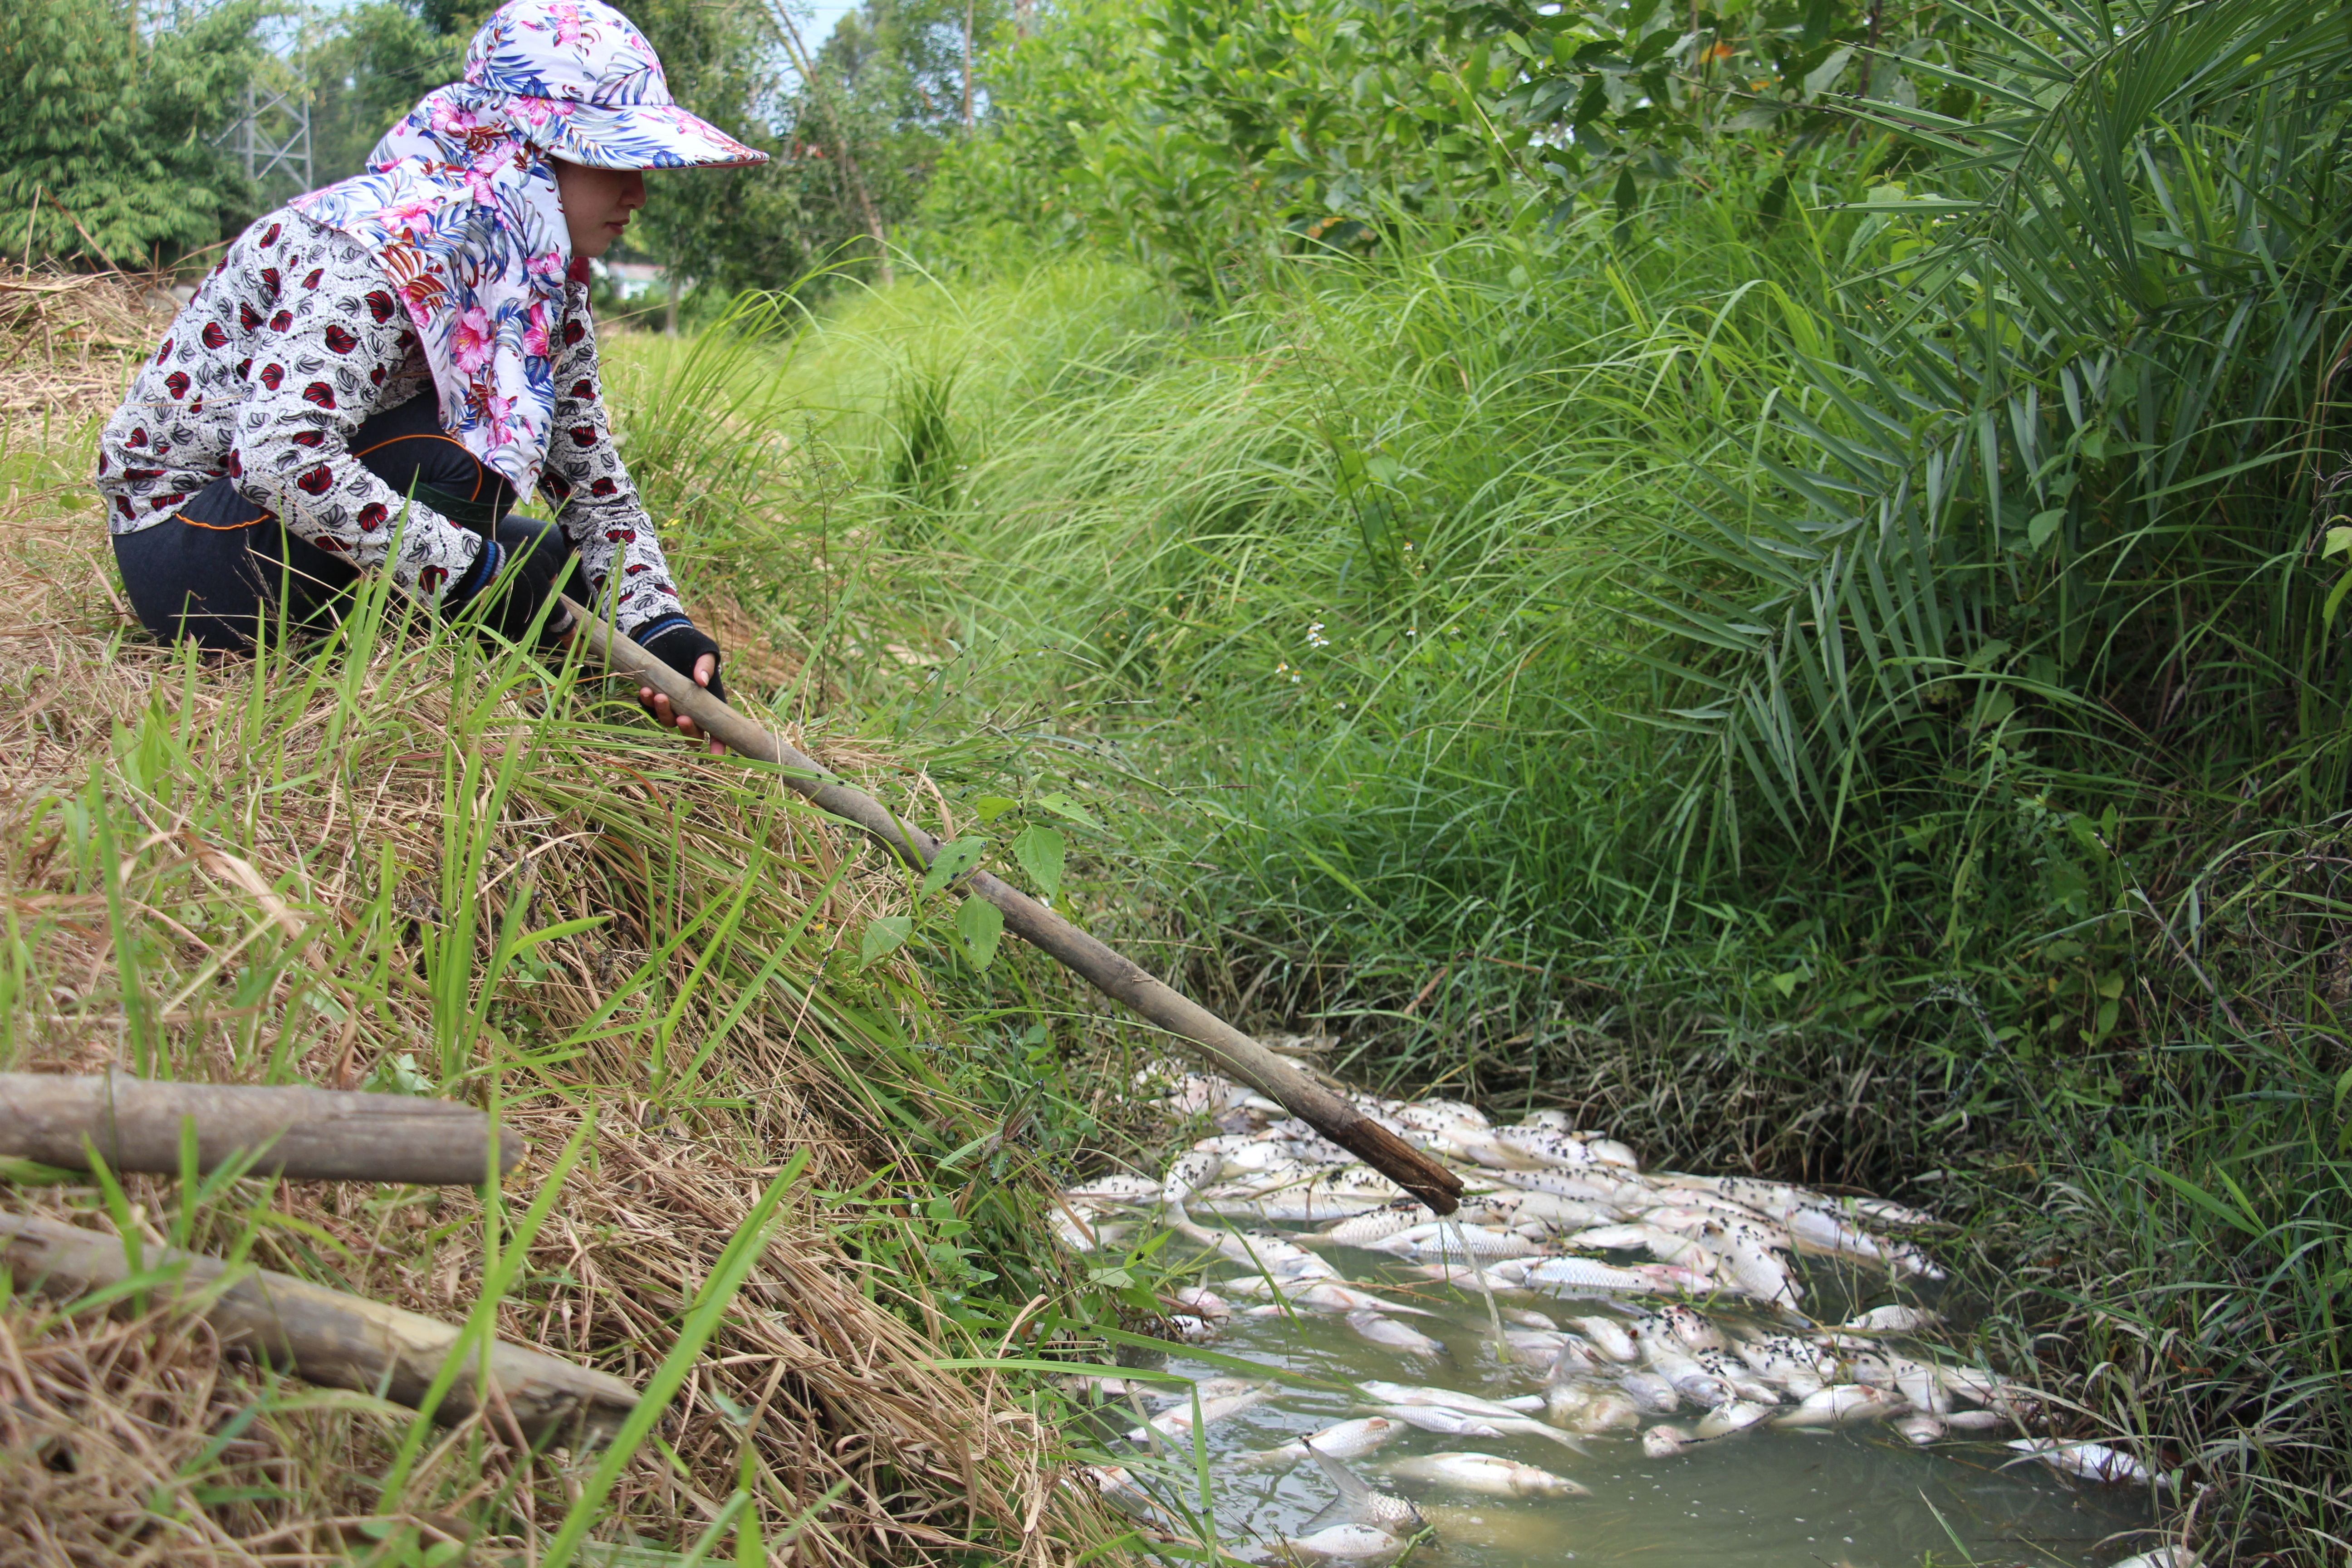 Residents salvage some dead fish. Photo: Tuoi Tre